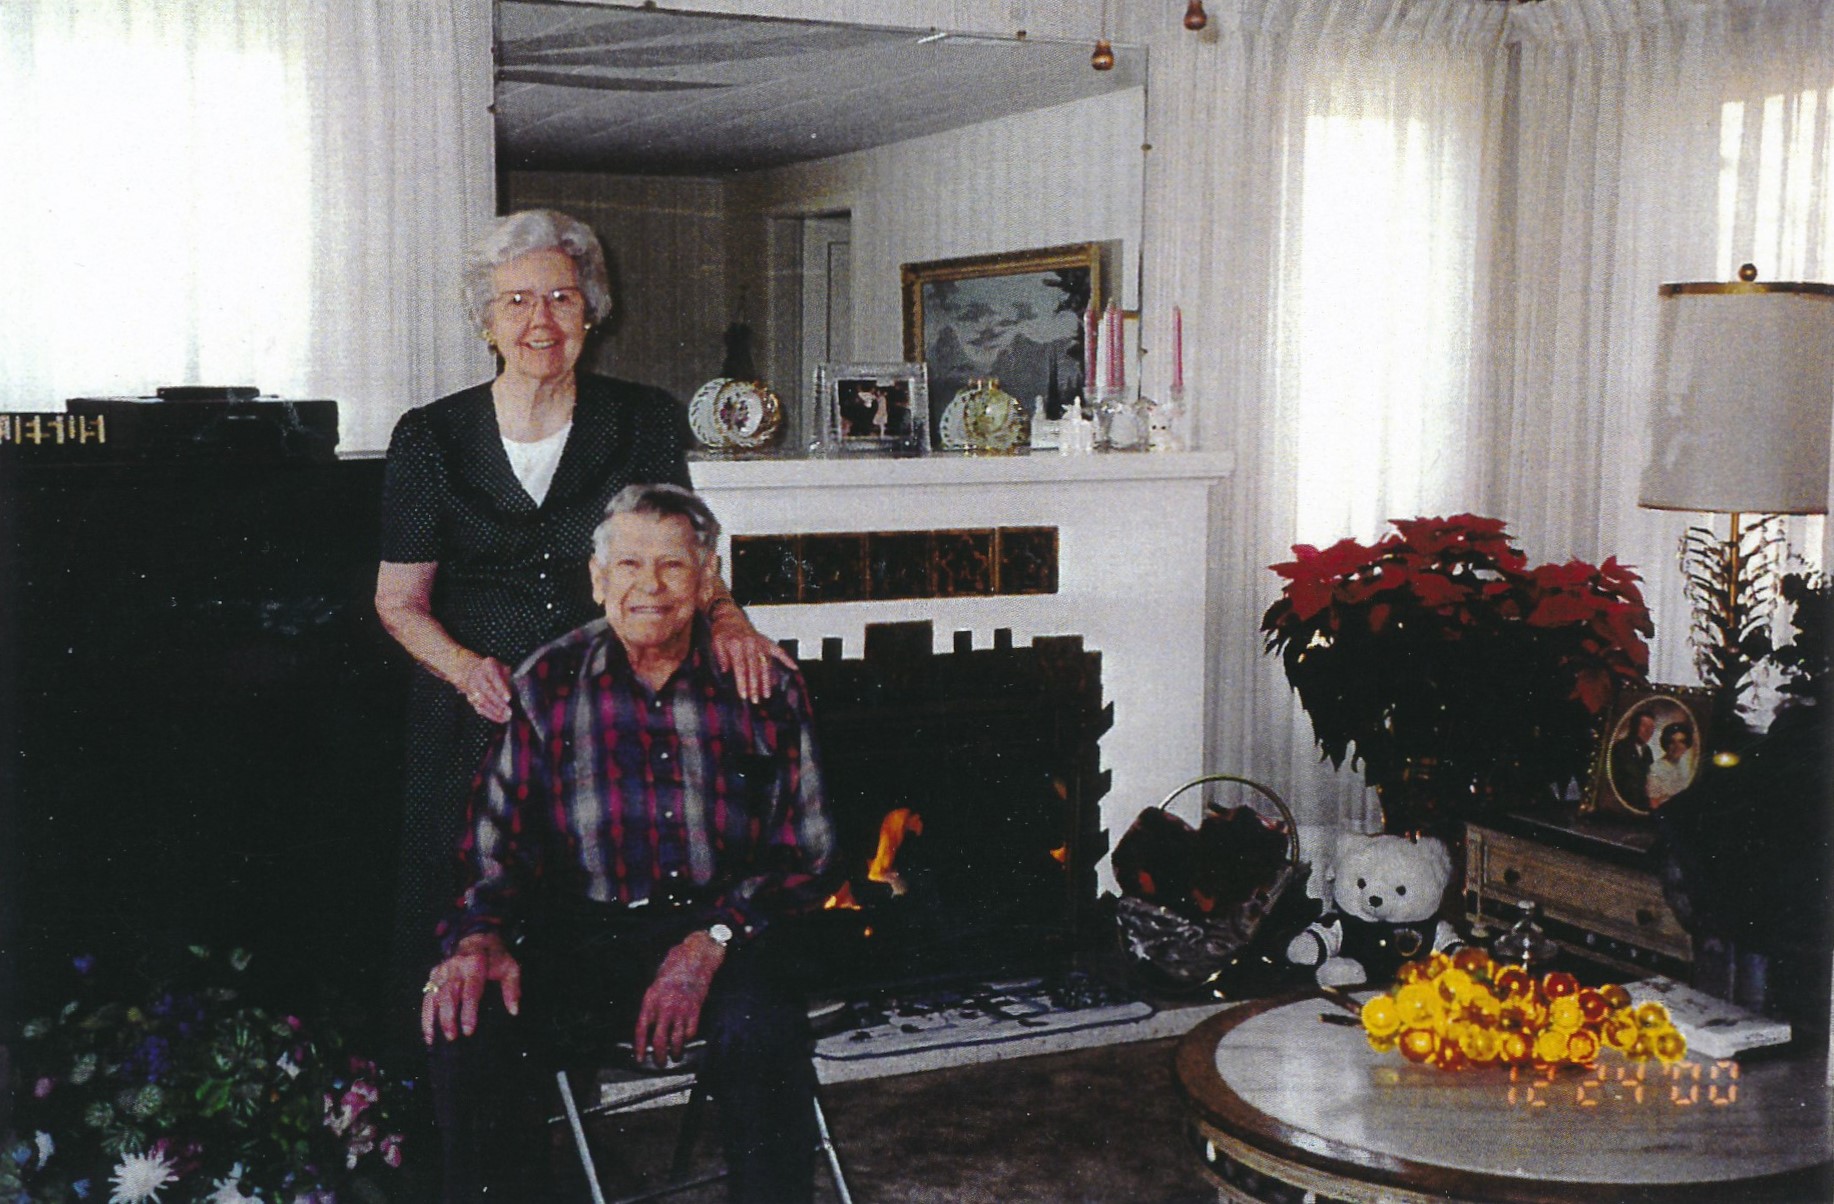 Elgin & Vivian Graff on their 70th wedding anniversary